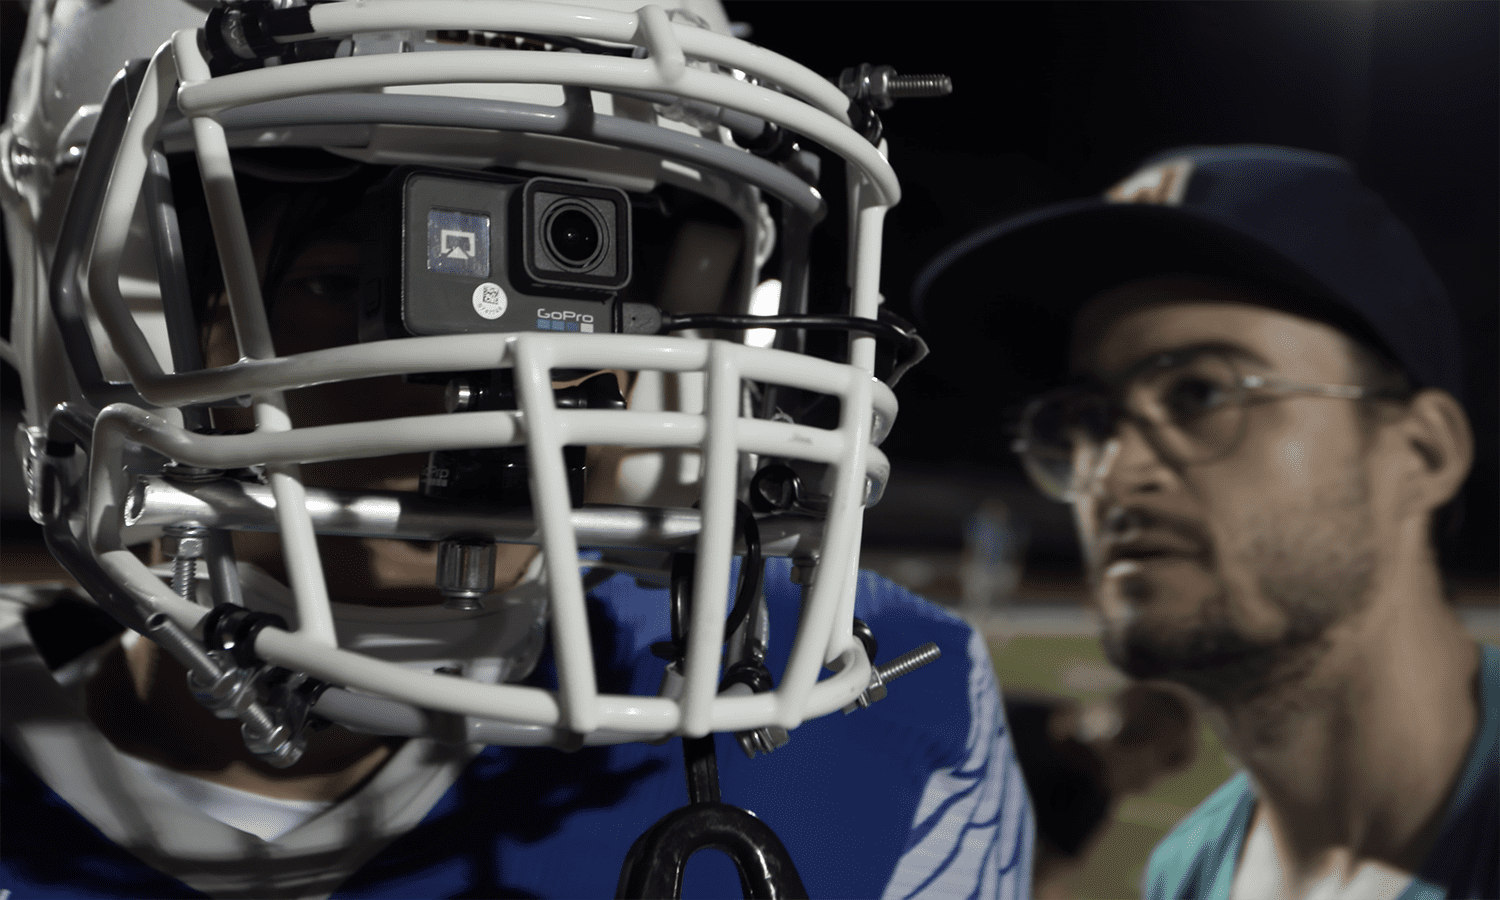 Cameraman checks go pro mounted on football player's helmet